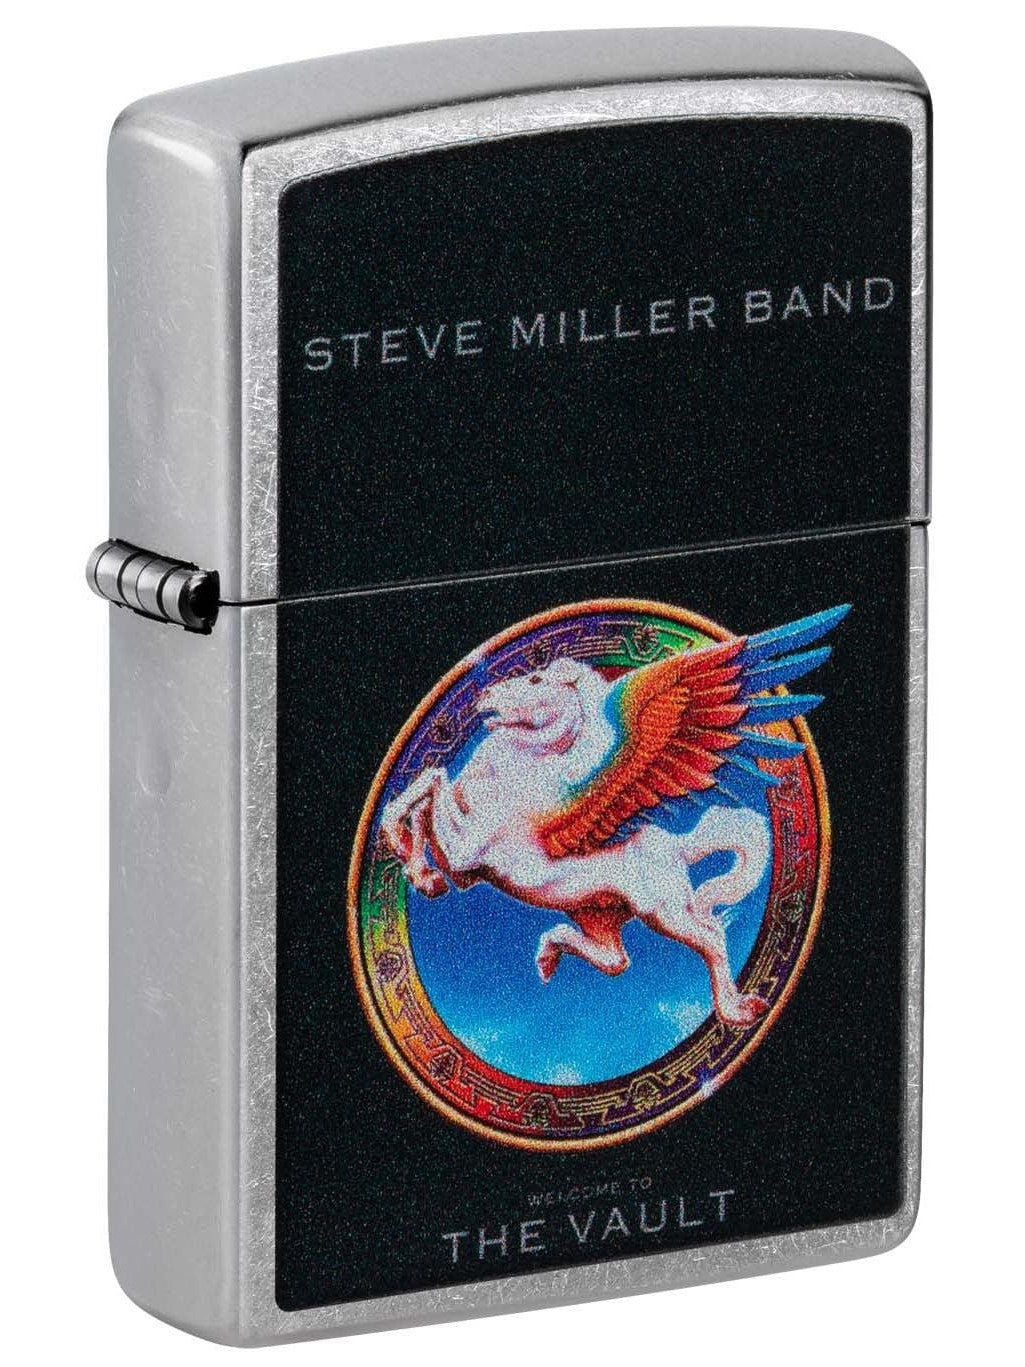 Zippo Lighter: Steve Miller Band, Welcome to the Vault - Street Chrome 48179